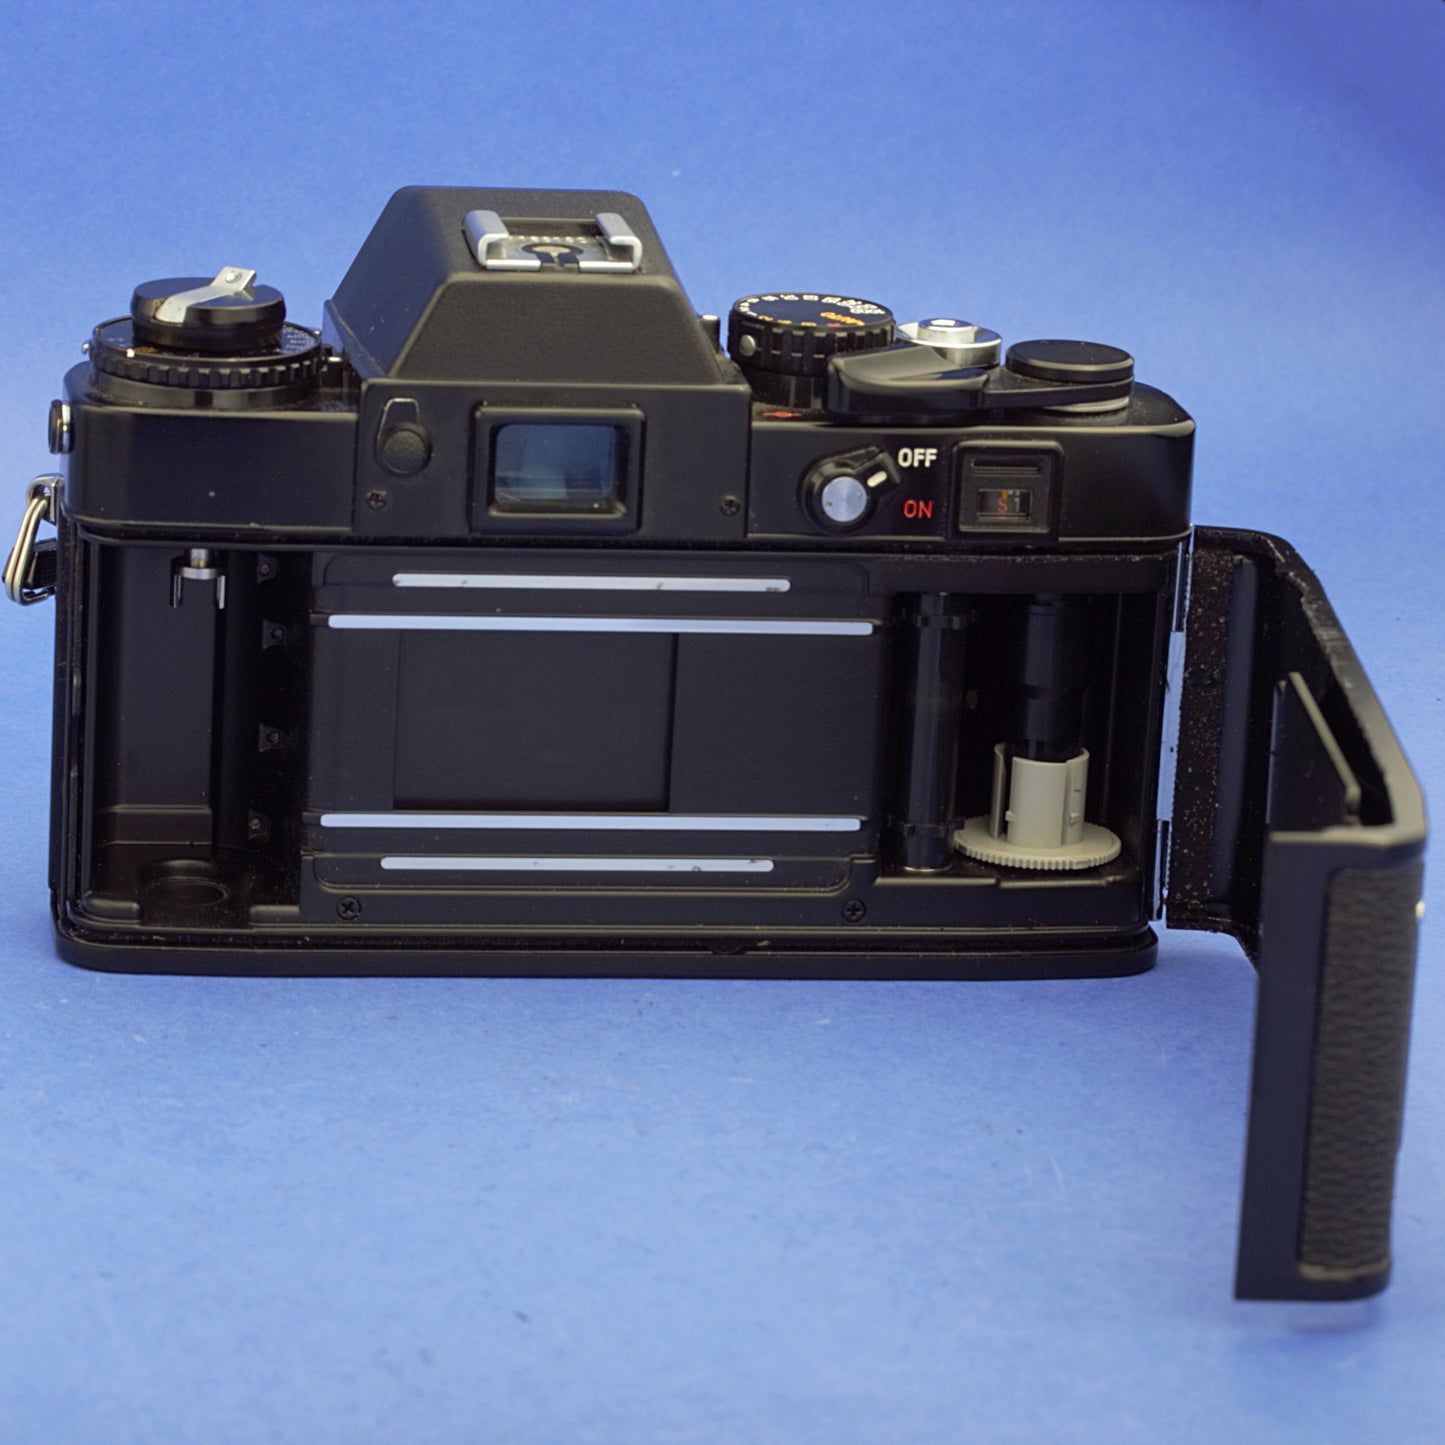 Minolta XE-7 Film Camera Body Not Working